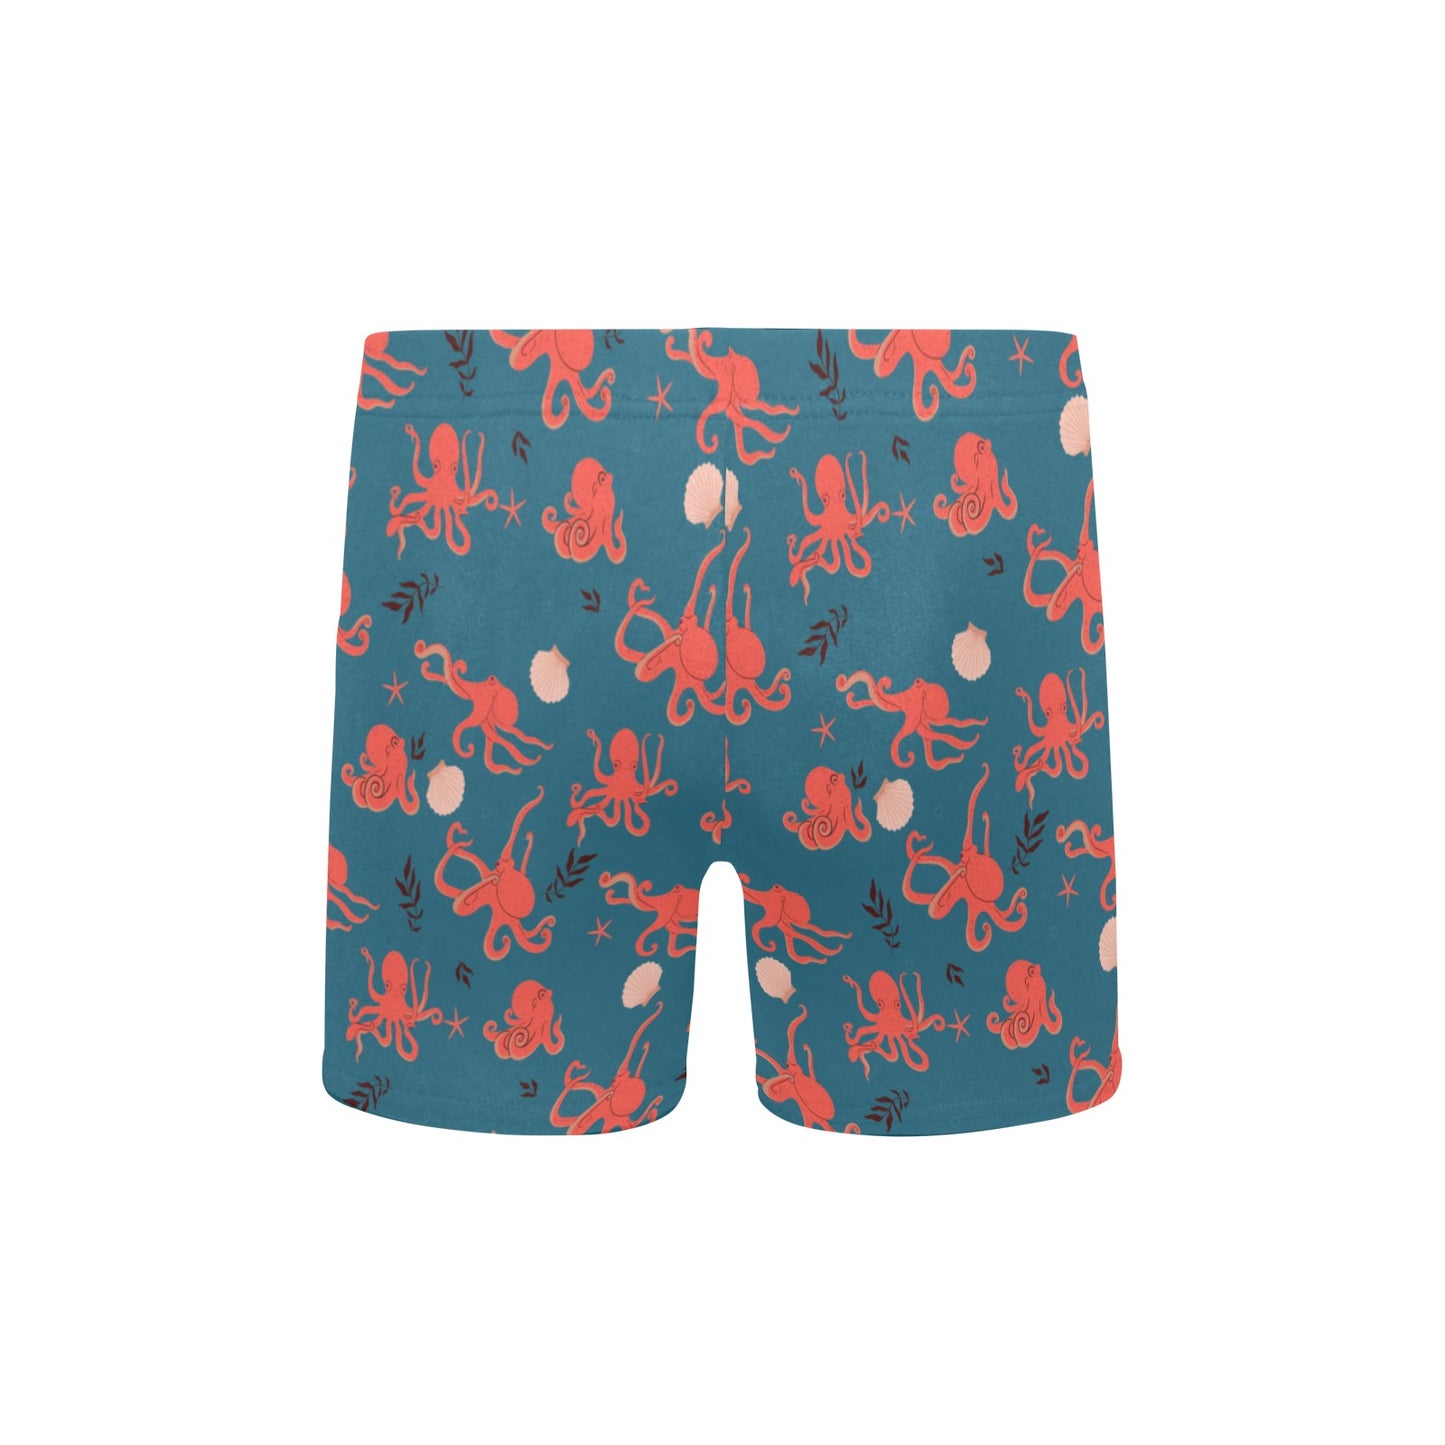 Octopus Boys Swim Trunks shorts (2-7), Orange Blue Bathing Suit Toddler Beach Swim Kids with Inner Lining Drawstring Casual Shorts Swimsuit